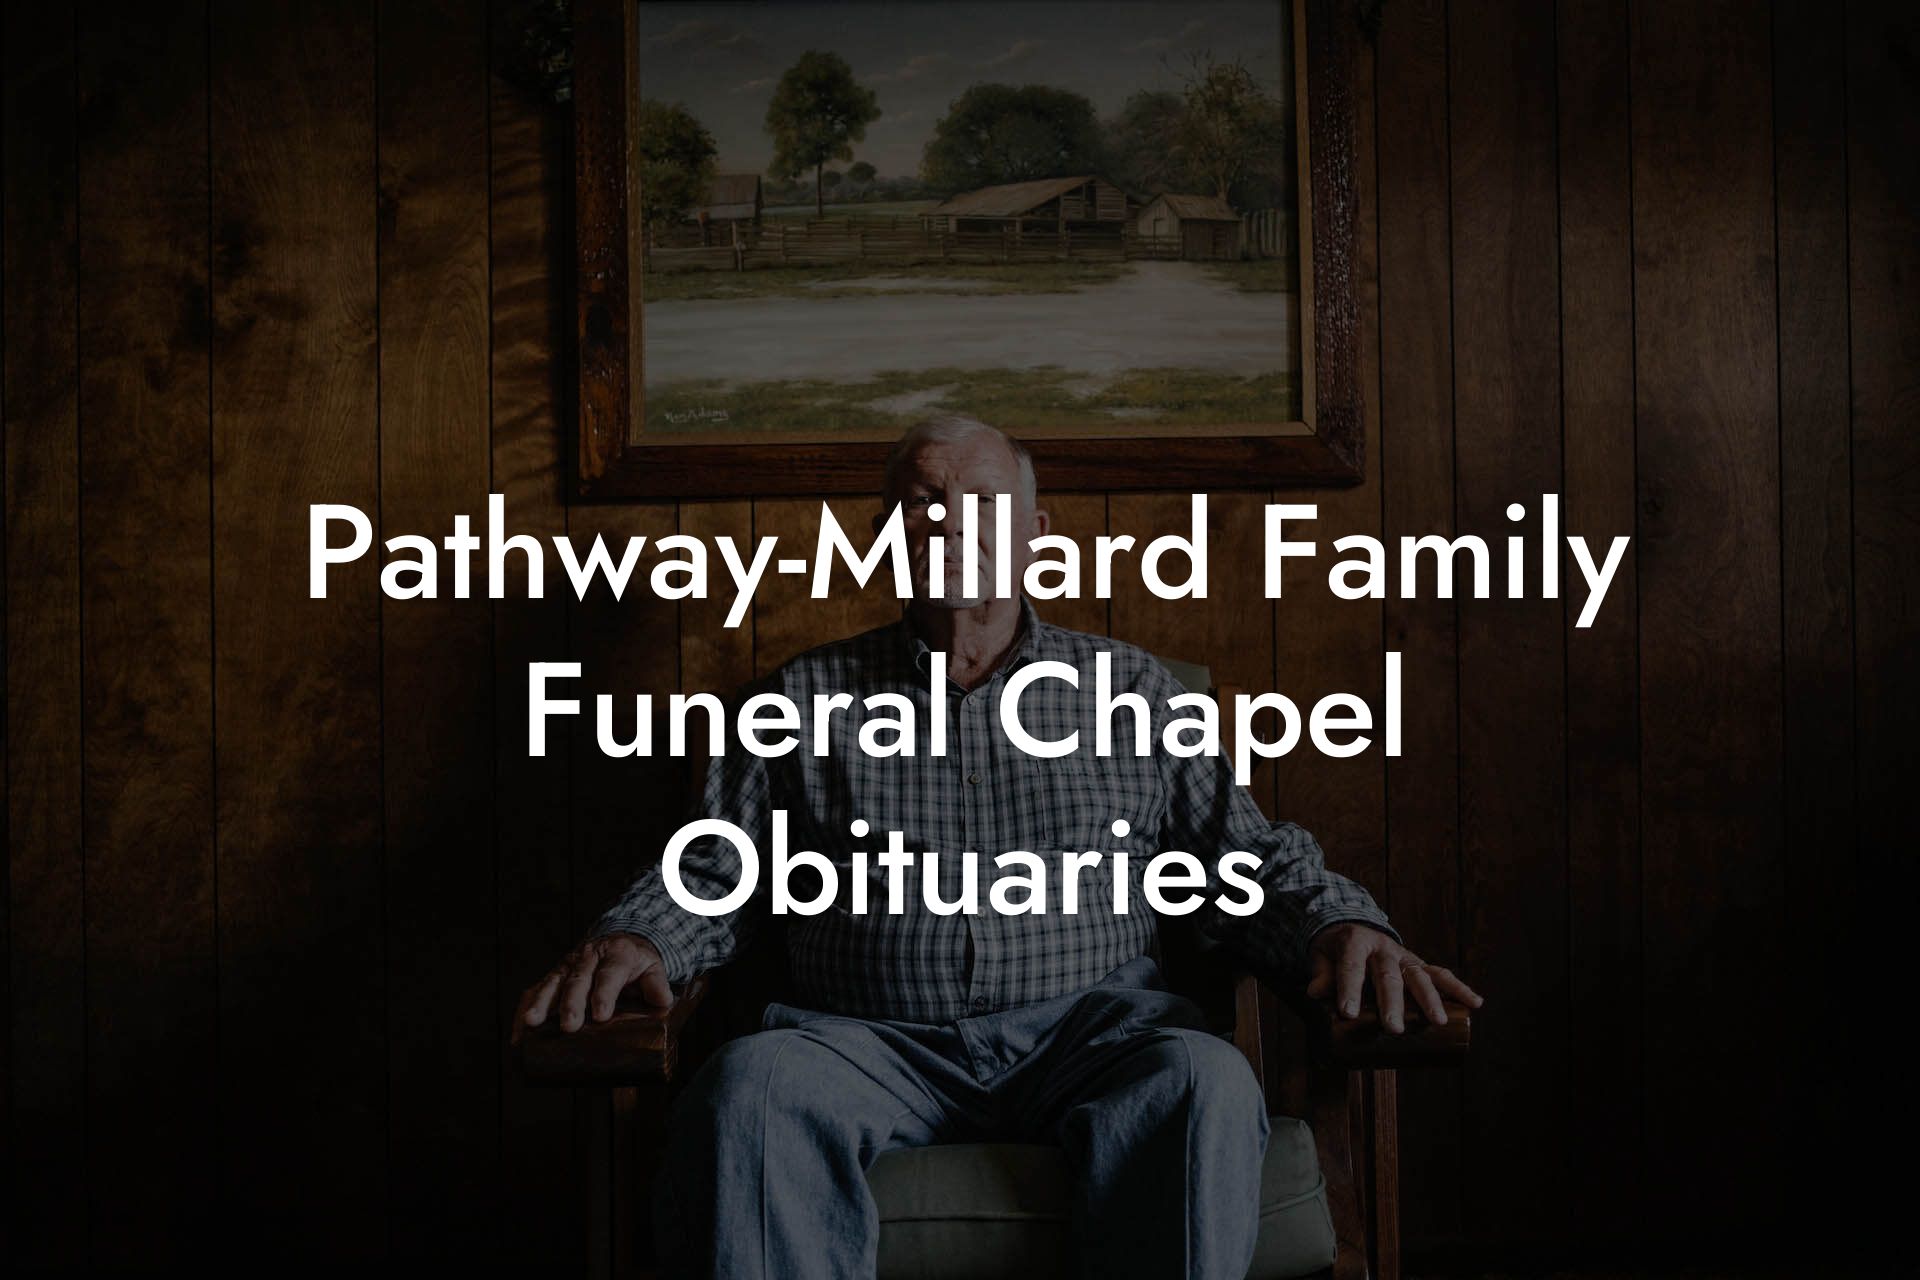 Pathway-Millard Family Funeral Chapel Obituaries